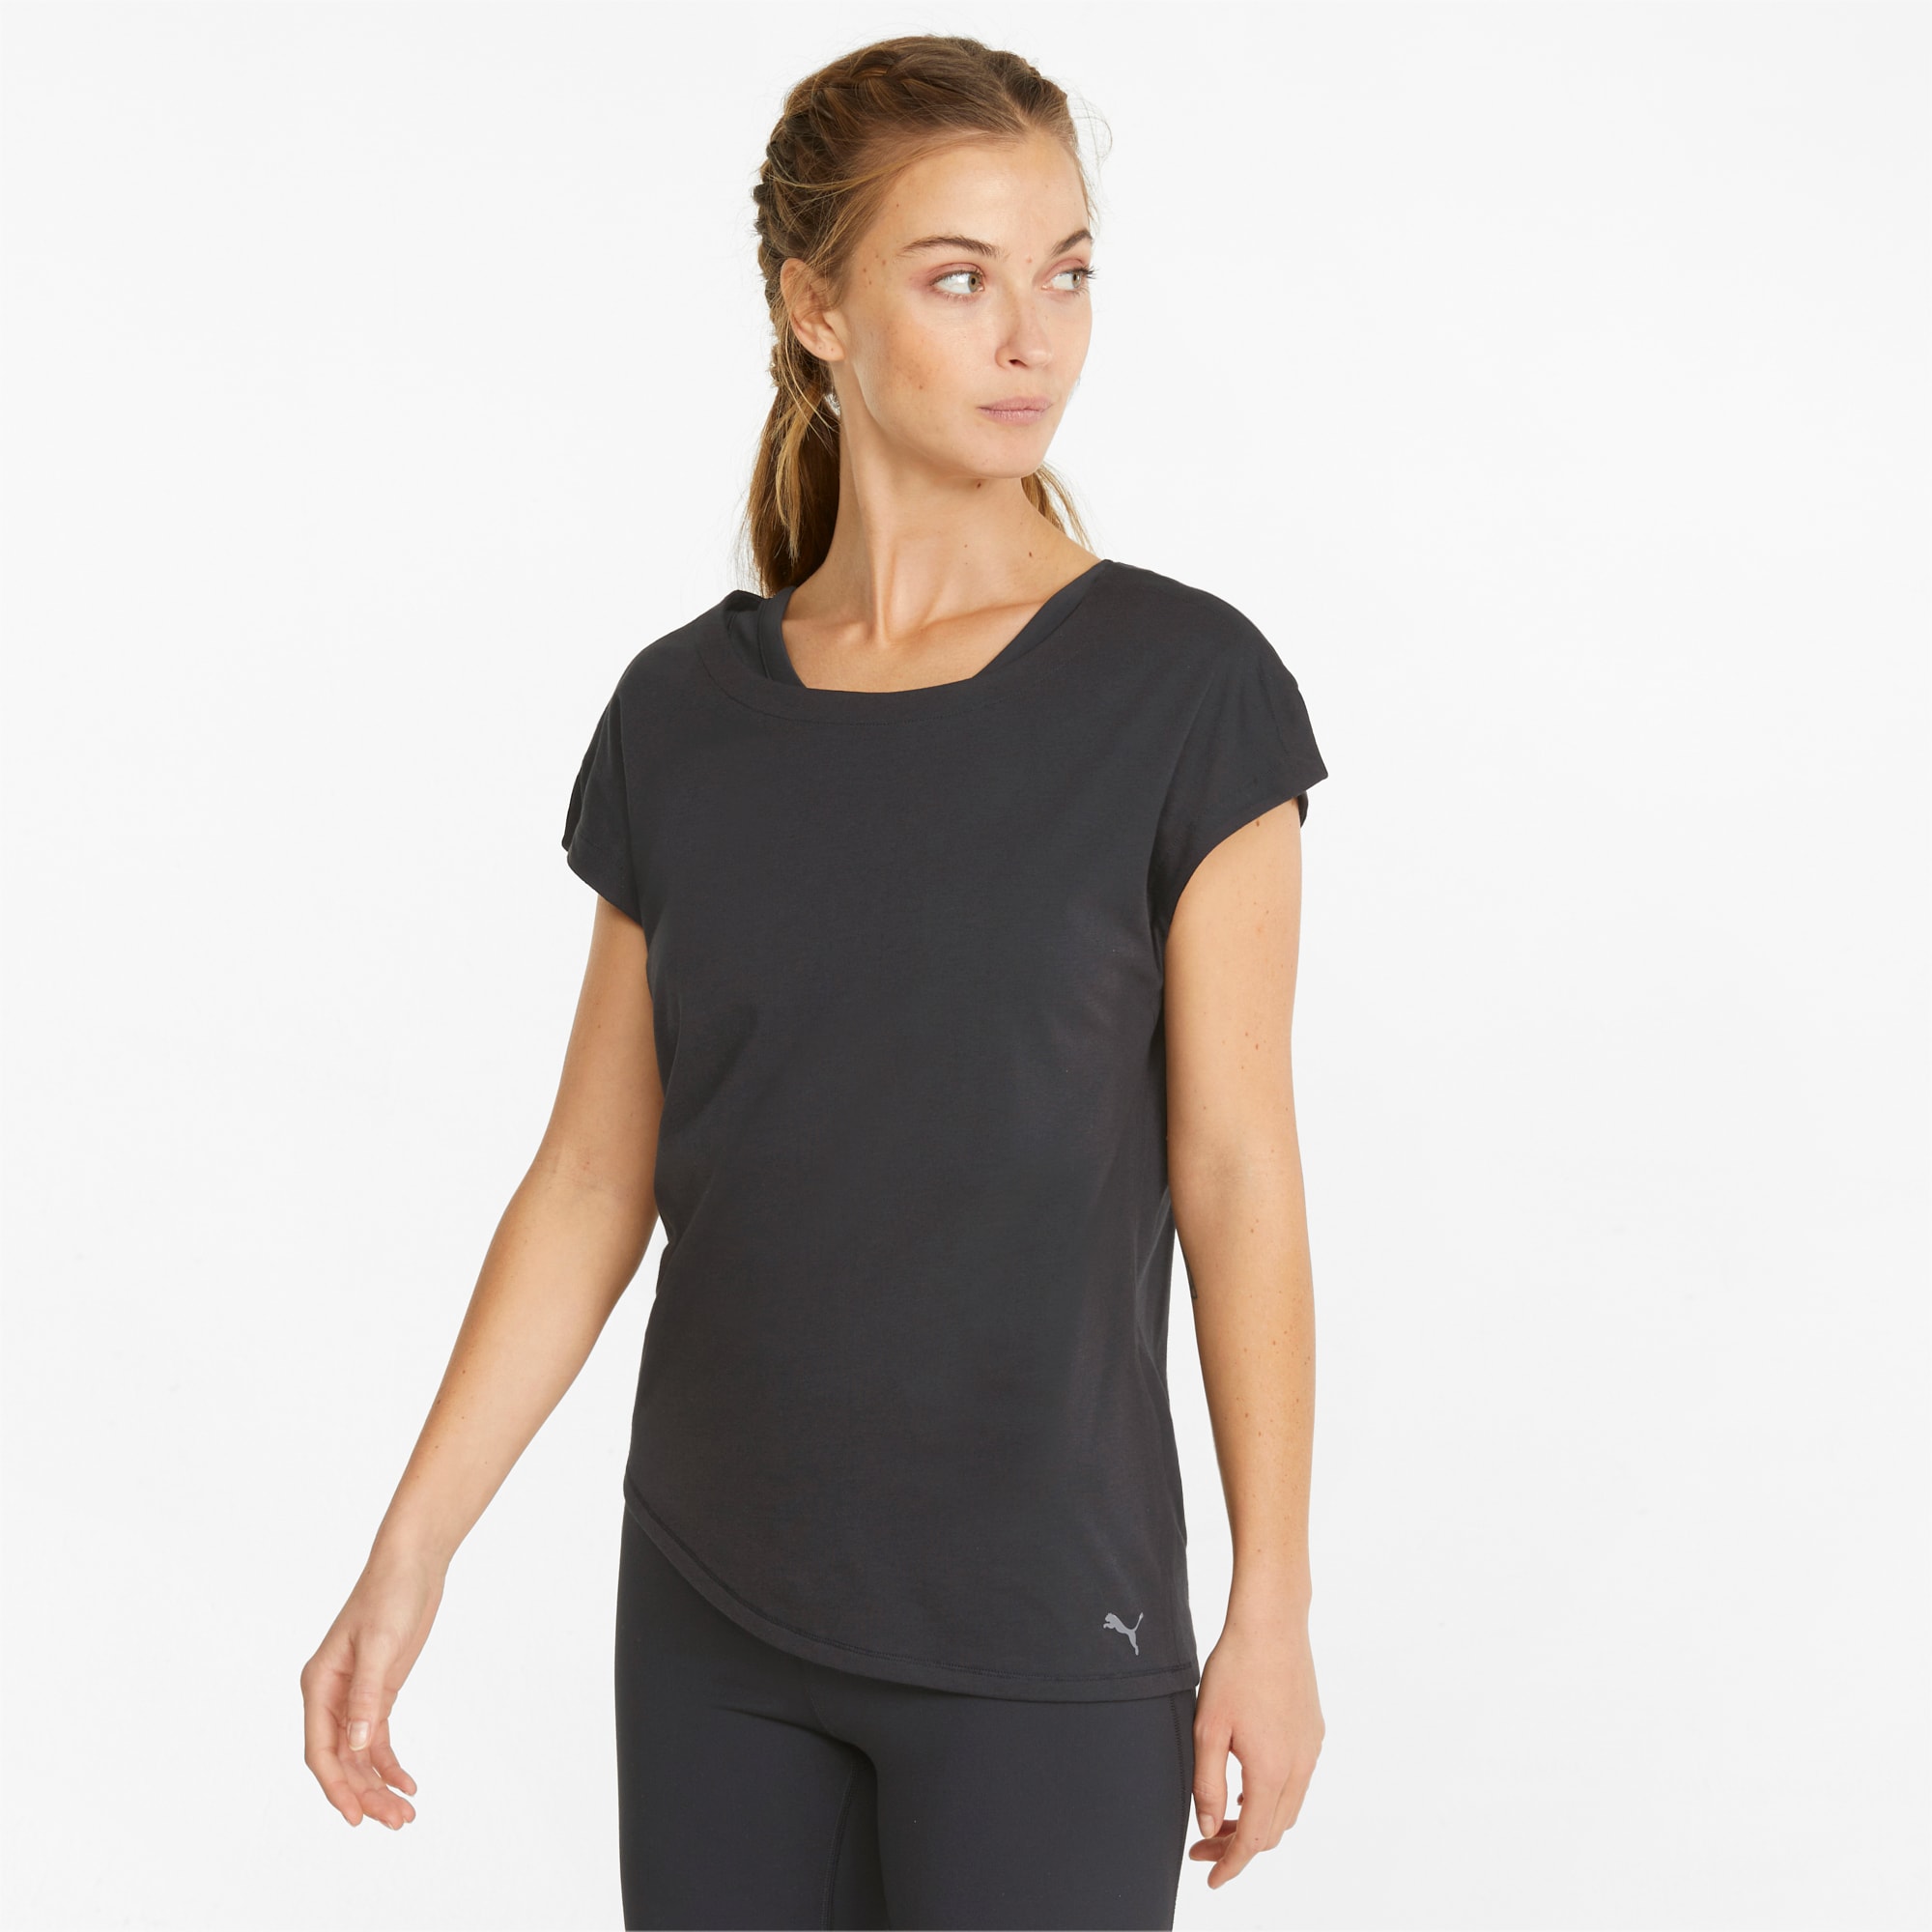 PUMA Studio Foundation Women's Training T-Shirt, Black, Size L, Clothing